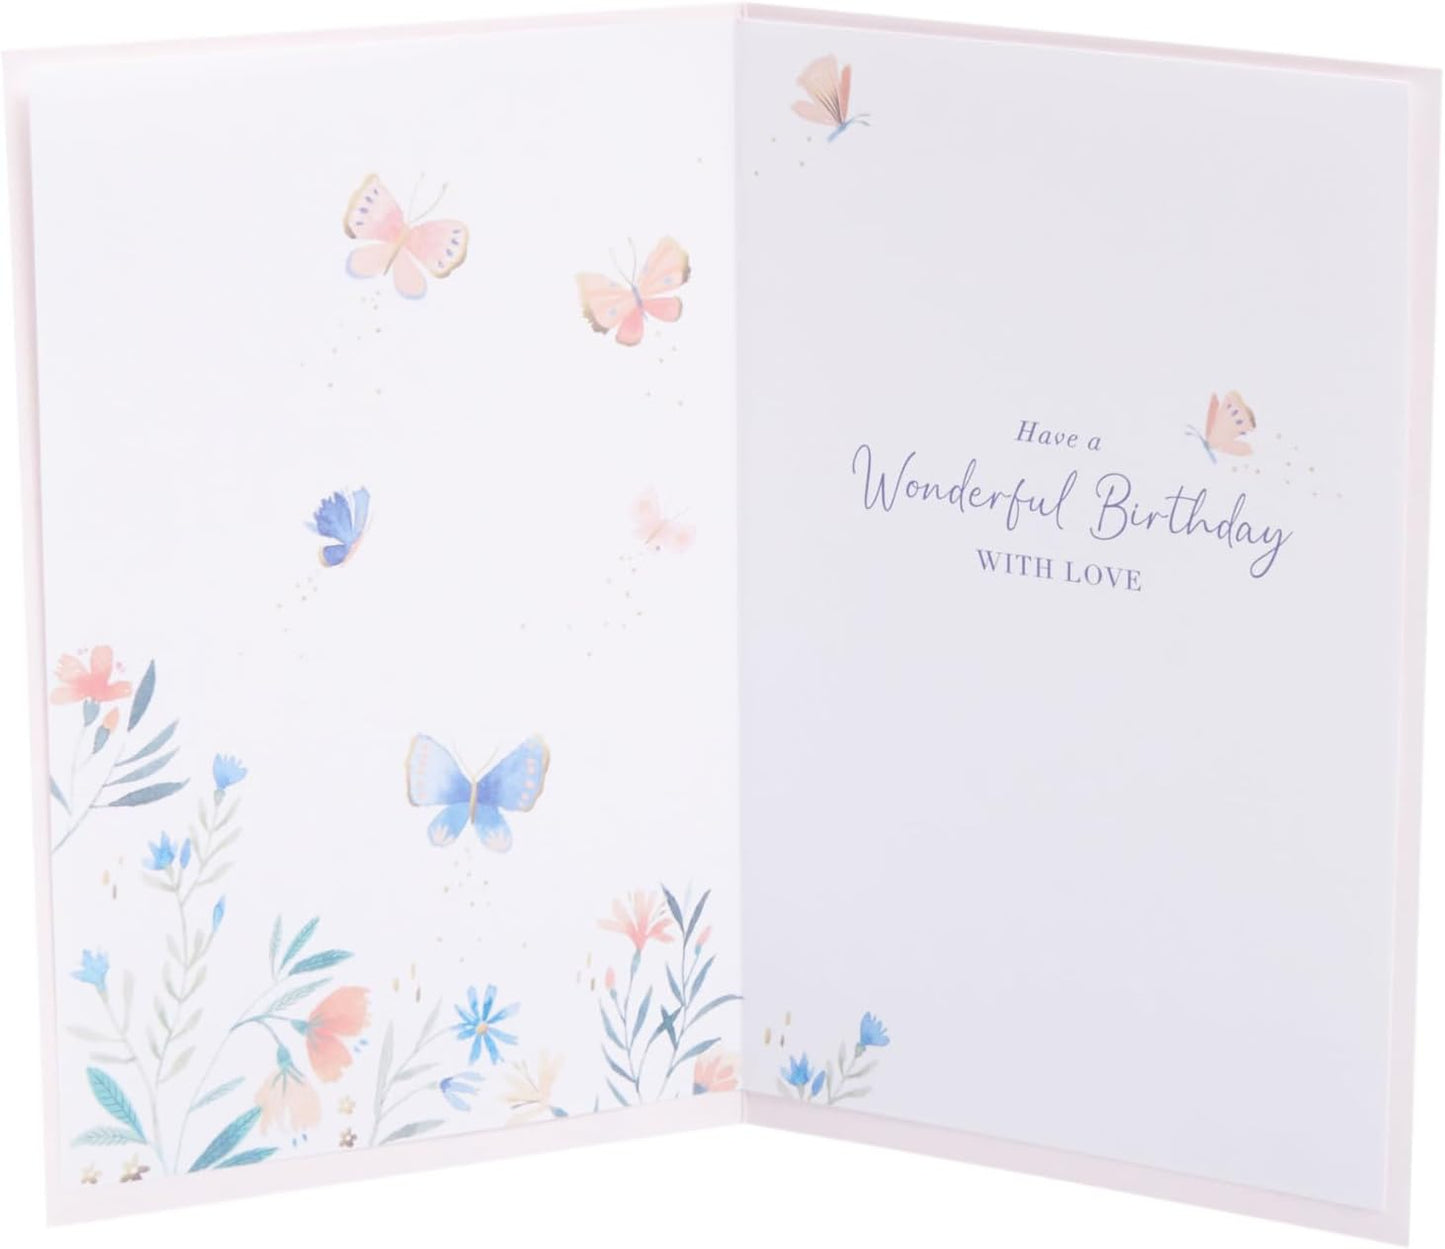 Floral Design with Sentimental Verse Friend Birthday Card